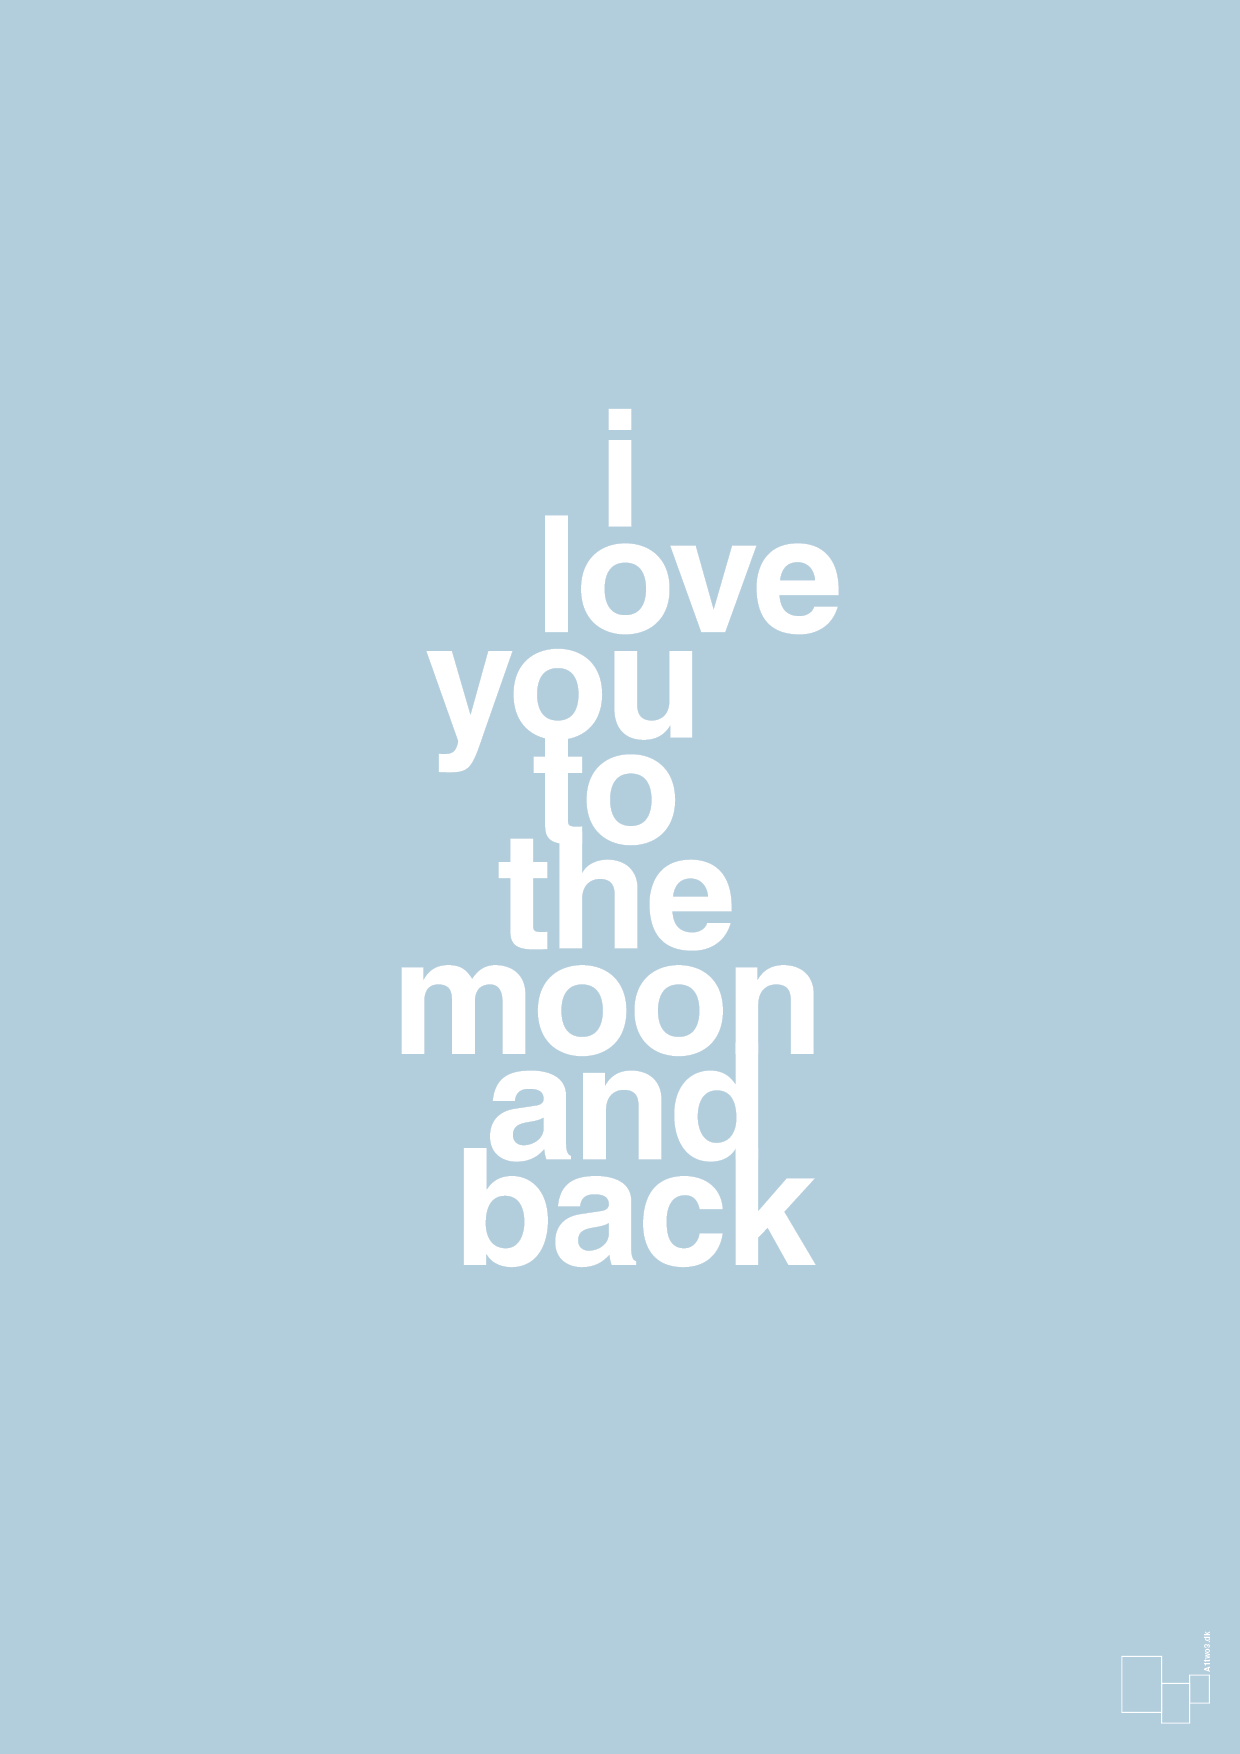 i love you to the moon and back - Plakat med Ordsprog i Heavenly Blue